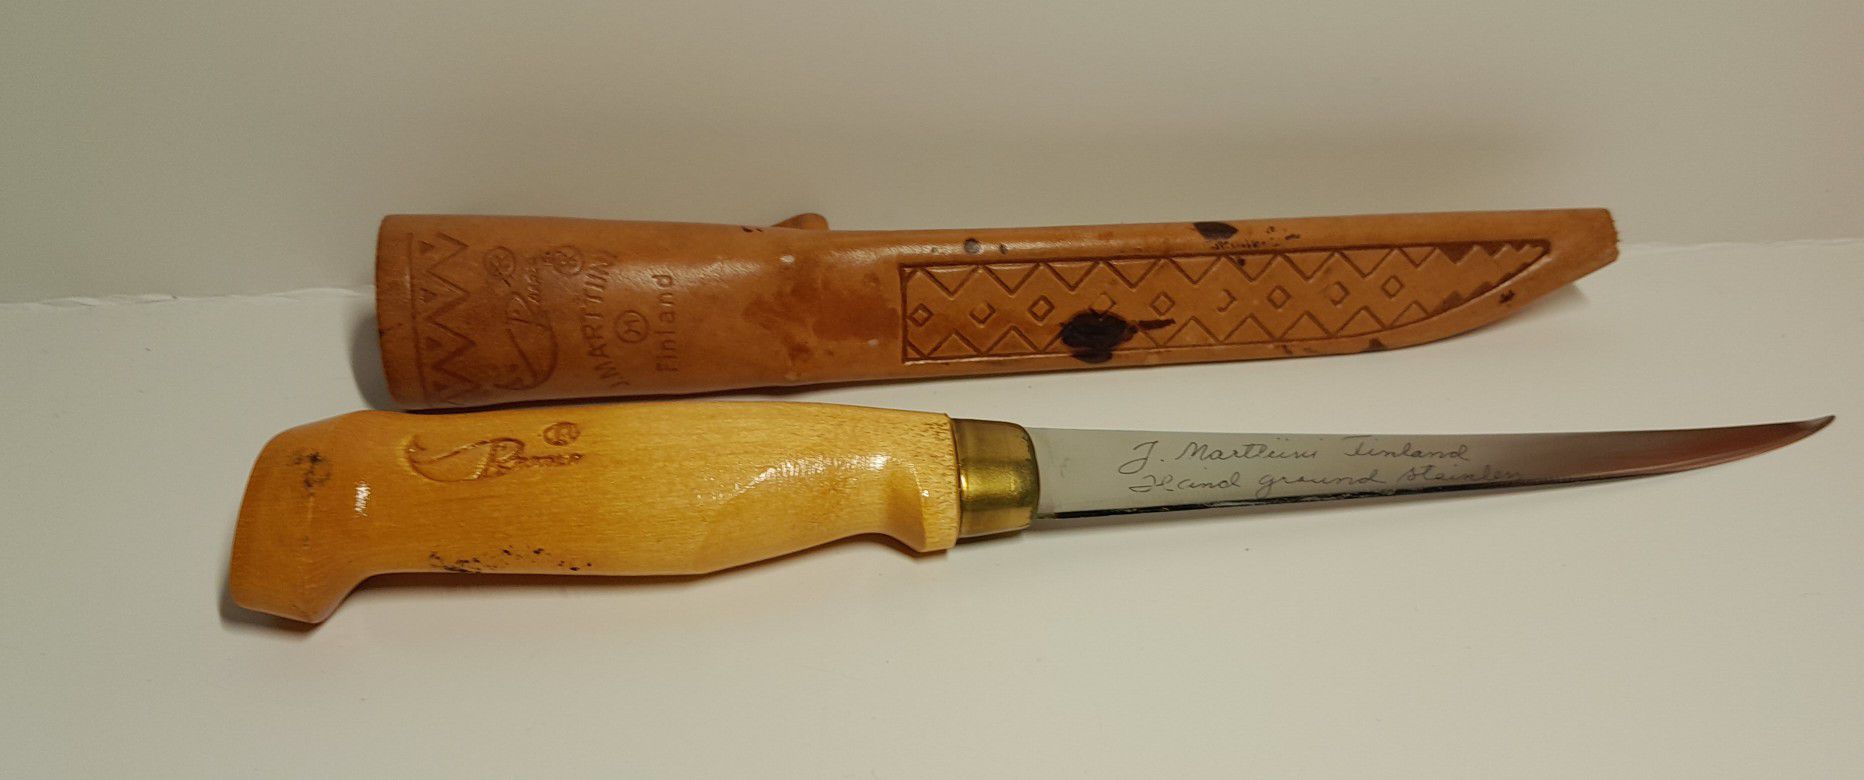 Finland Vintage Fillet Knife w Stainless Blade & Wood Handle